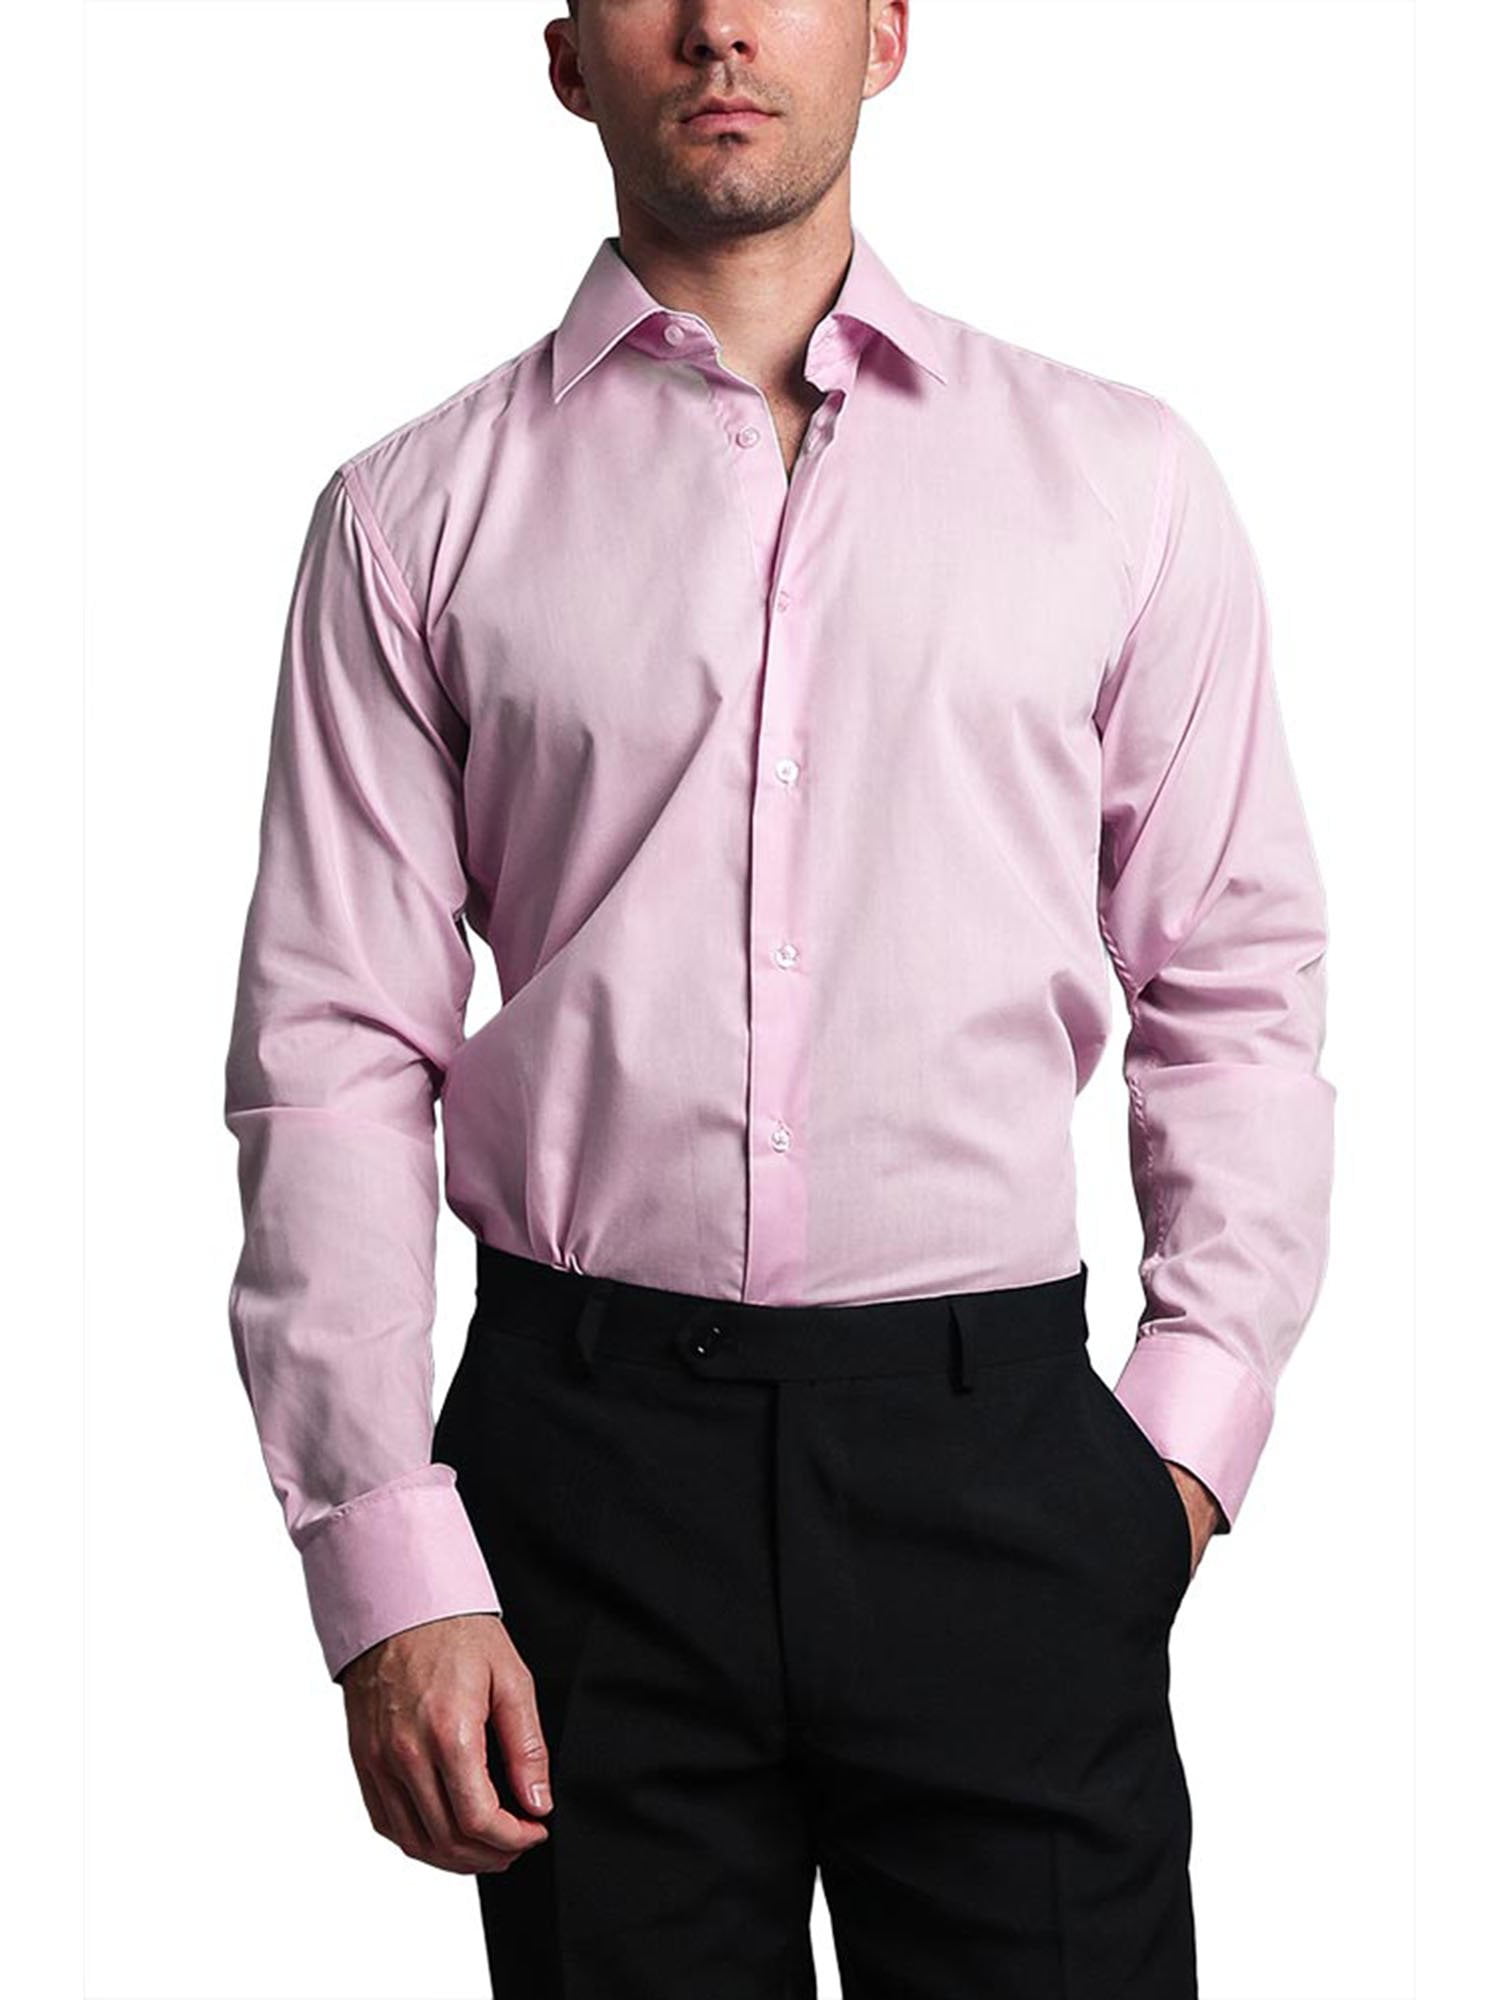 G-Style - G-Style USA Men's Slim Fit Dress Shirt - PINK - 2XL/18-18.5 ...